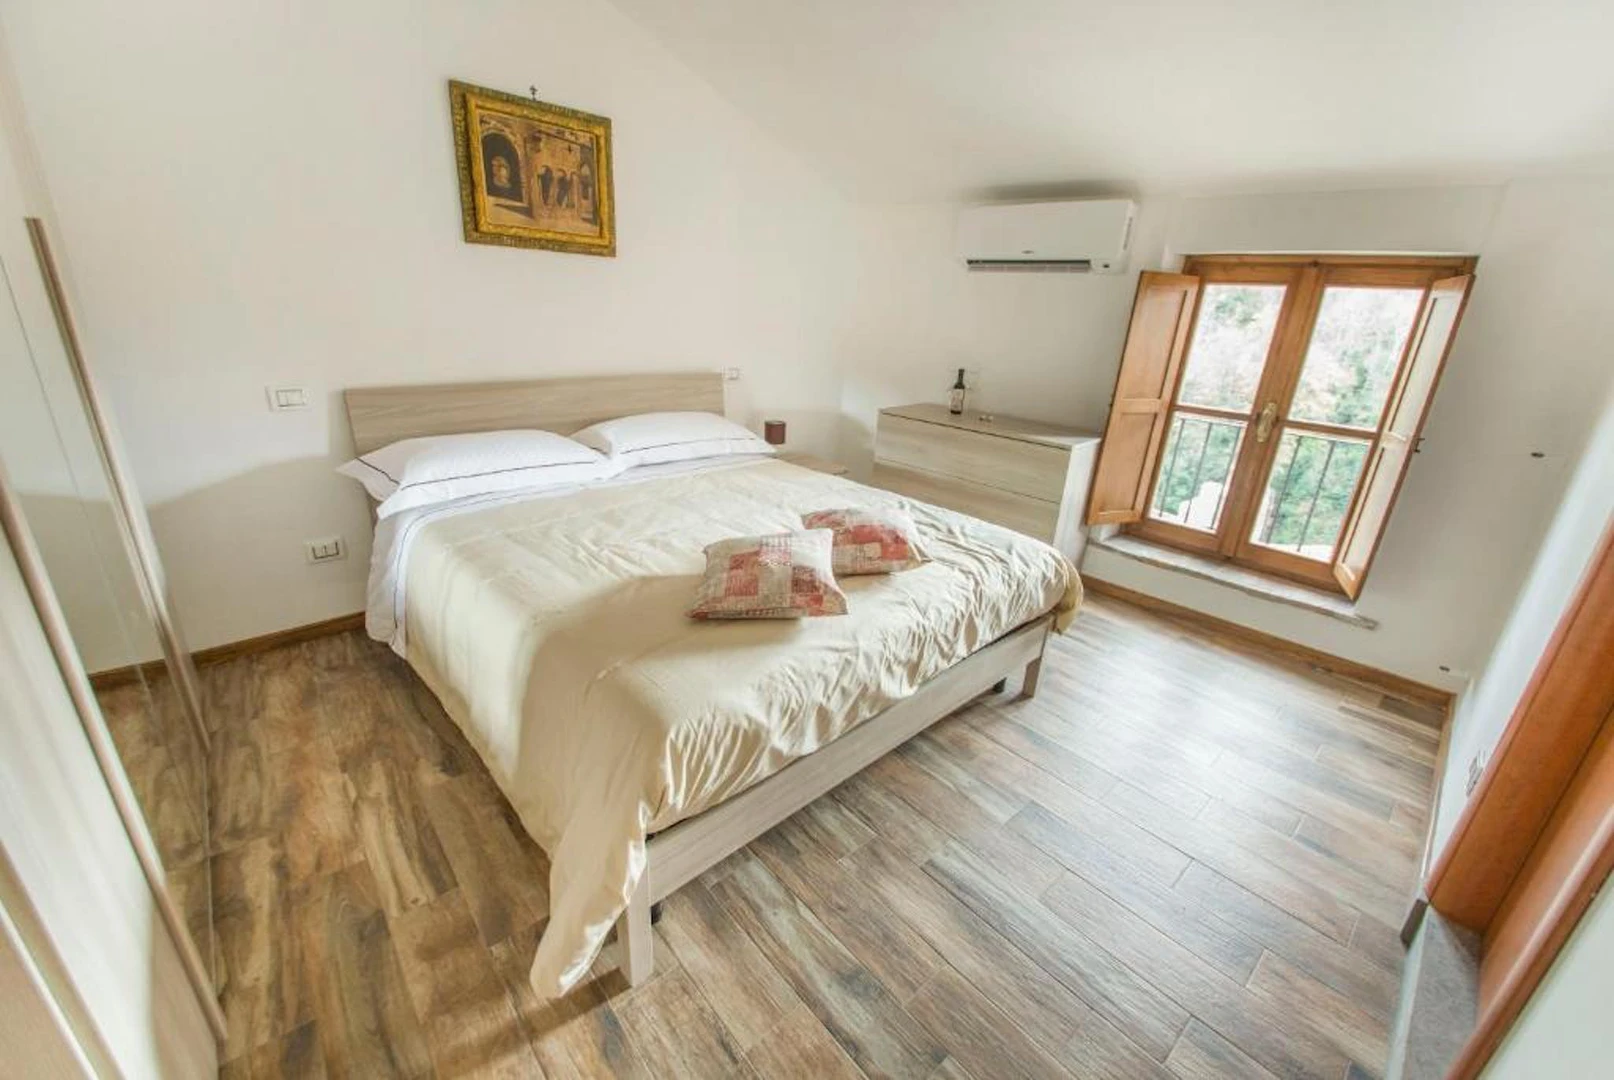 Shared room in 3-bedroom flat Viterbo